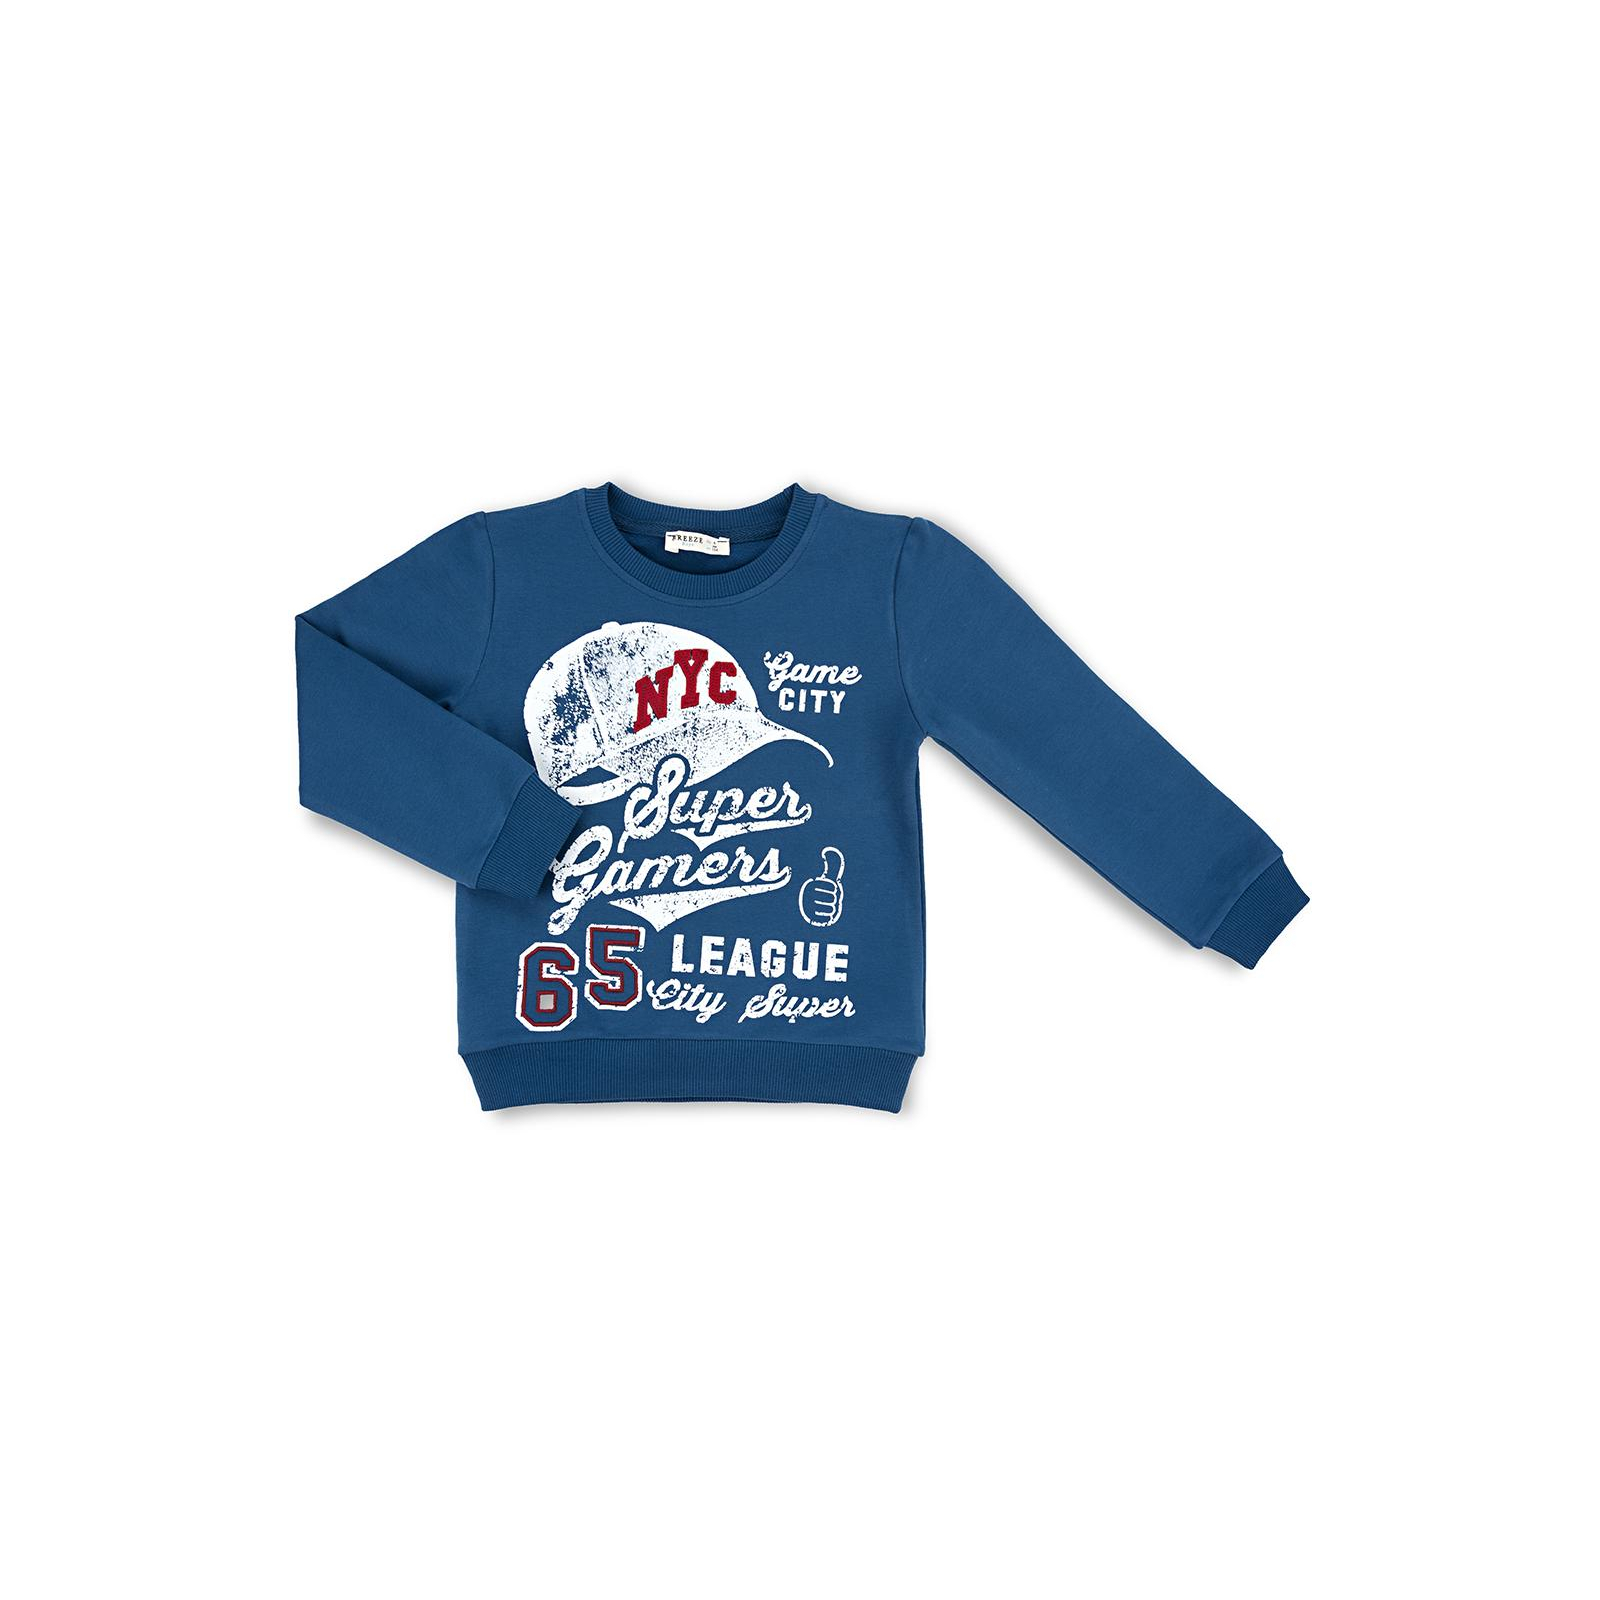 Спортивный костюм Breeze "Super gamers" (10996-134B-blue) изображение 2